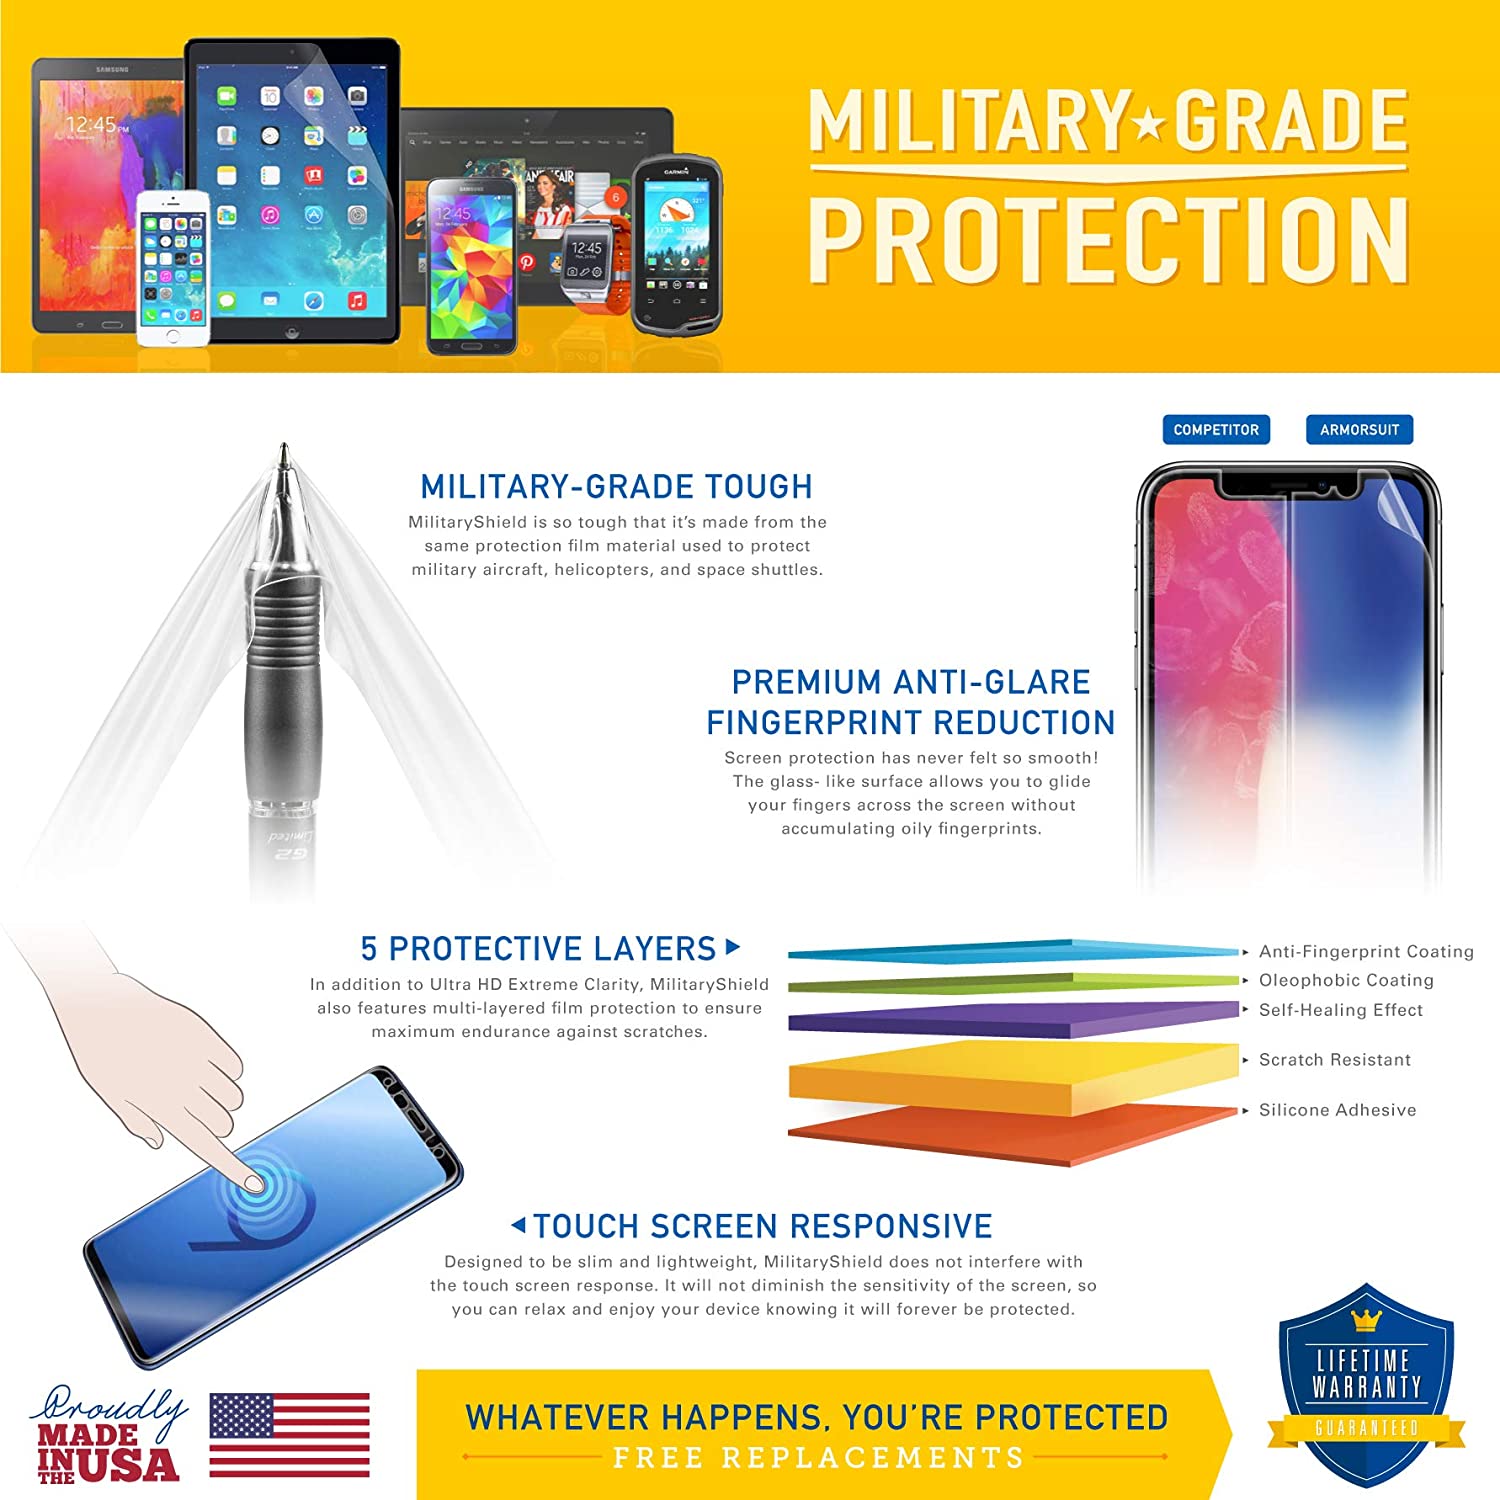 Samsung Galaxy Tab S 8.4 Full Body Skin Protector